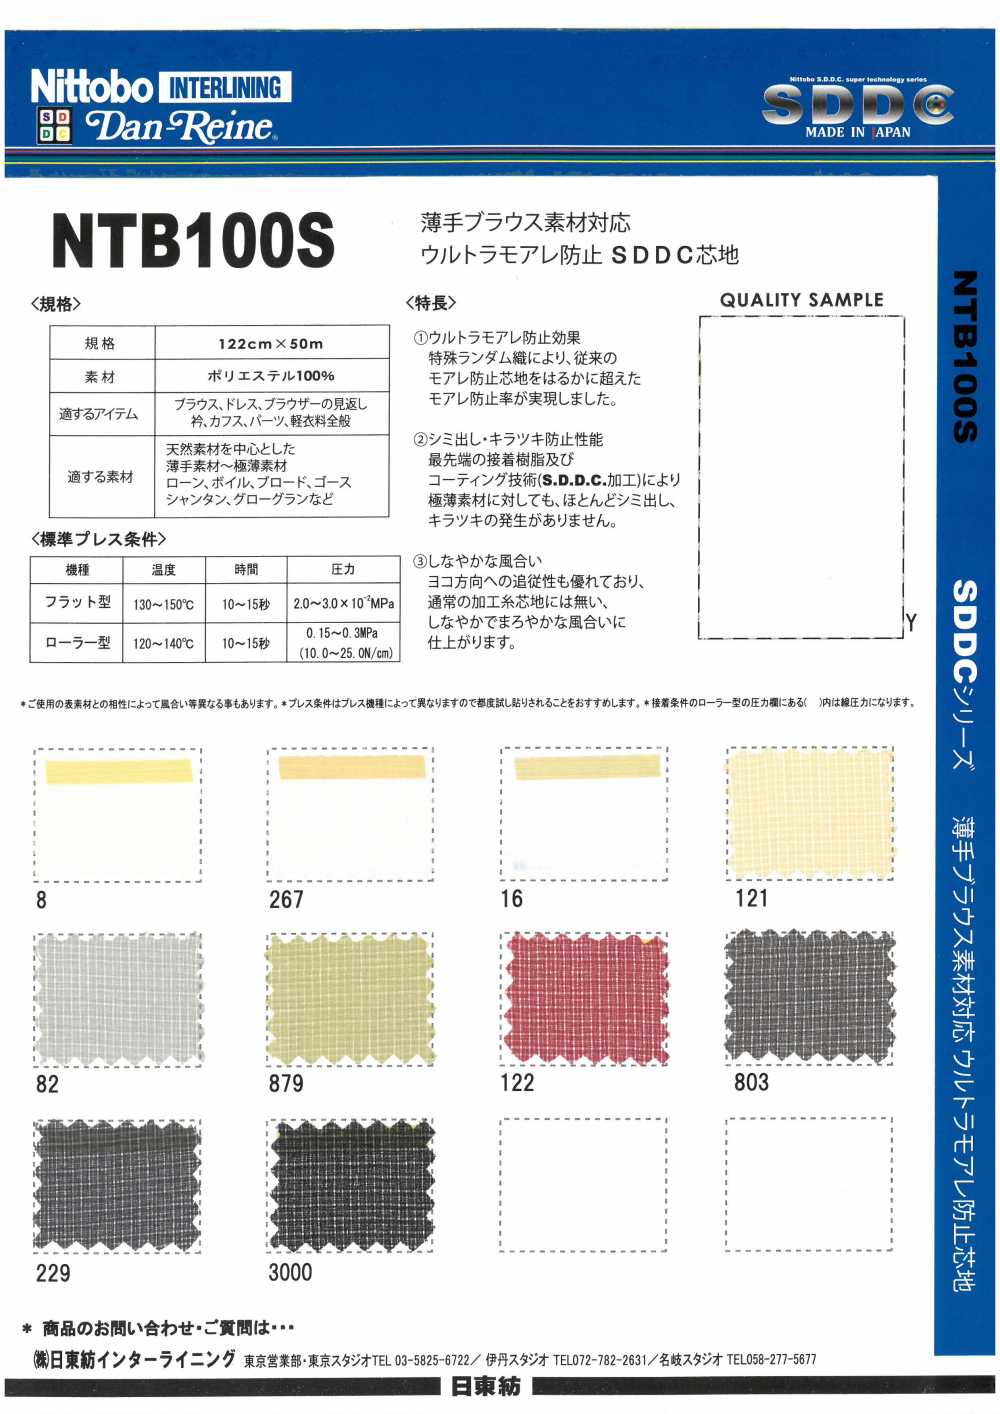 NTB100S 얇은 블라우스 소재 대응 울트라 모아레 방지 SDDC 심지 15D 닛토보 (닛토보인터라이닝)